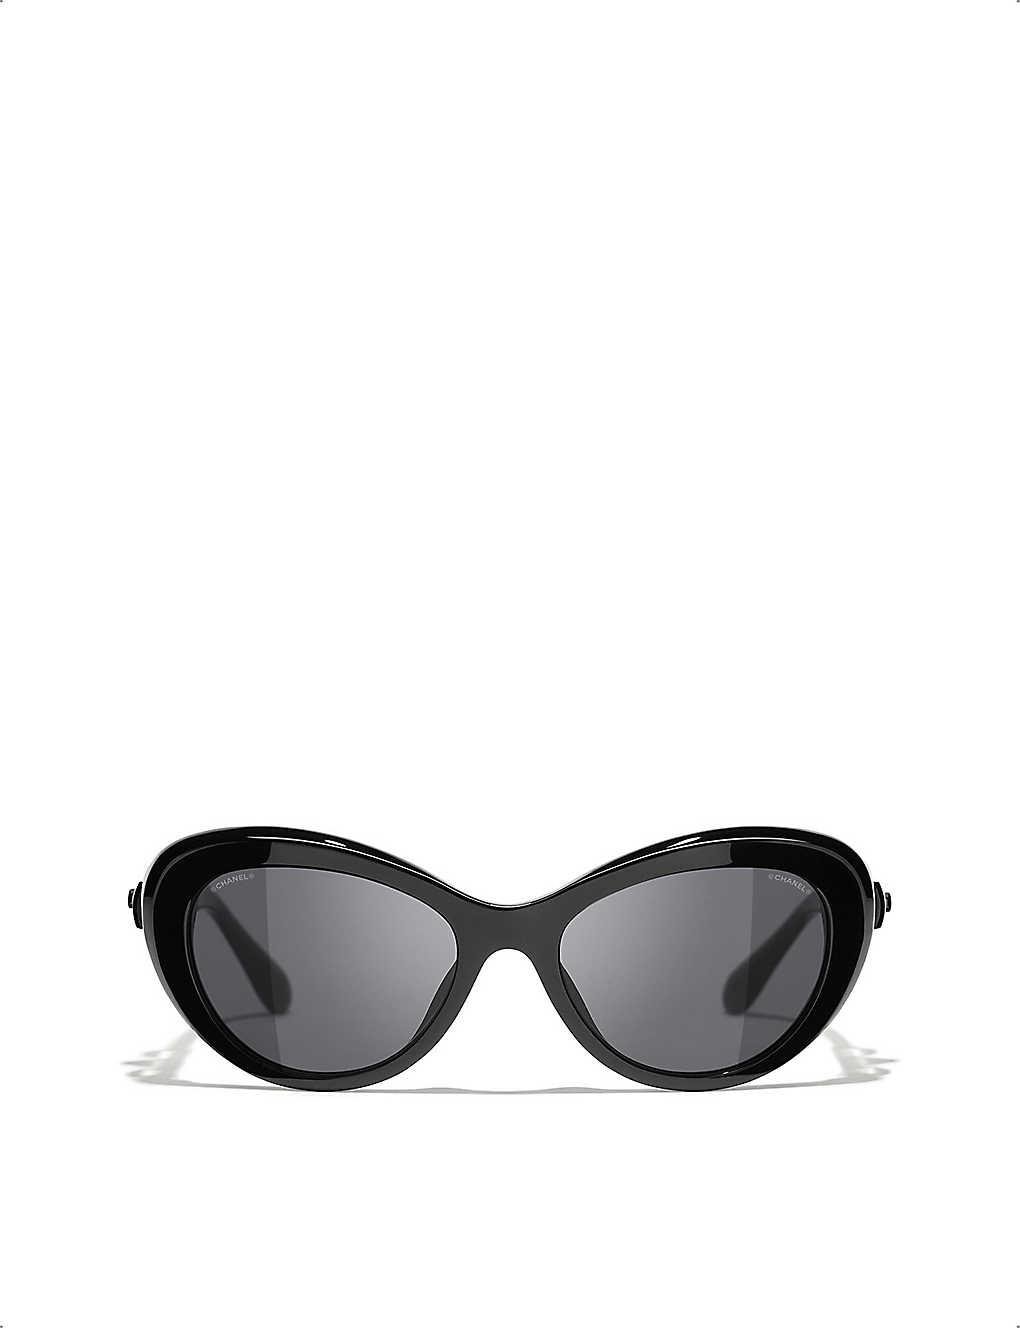 Chanel Cat Eye Sunglasses in Black